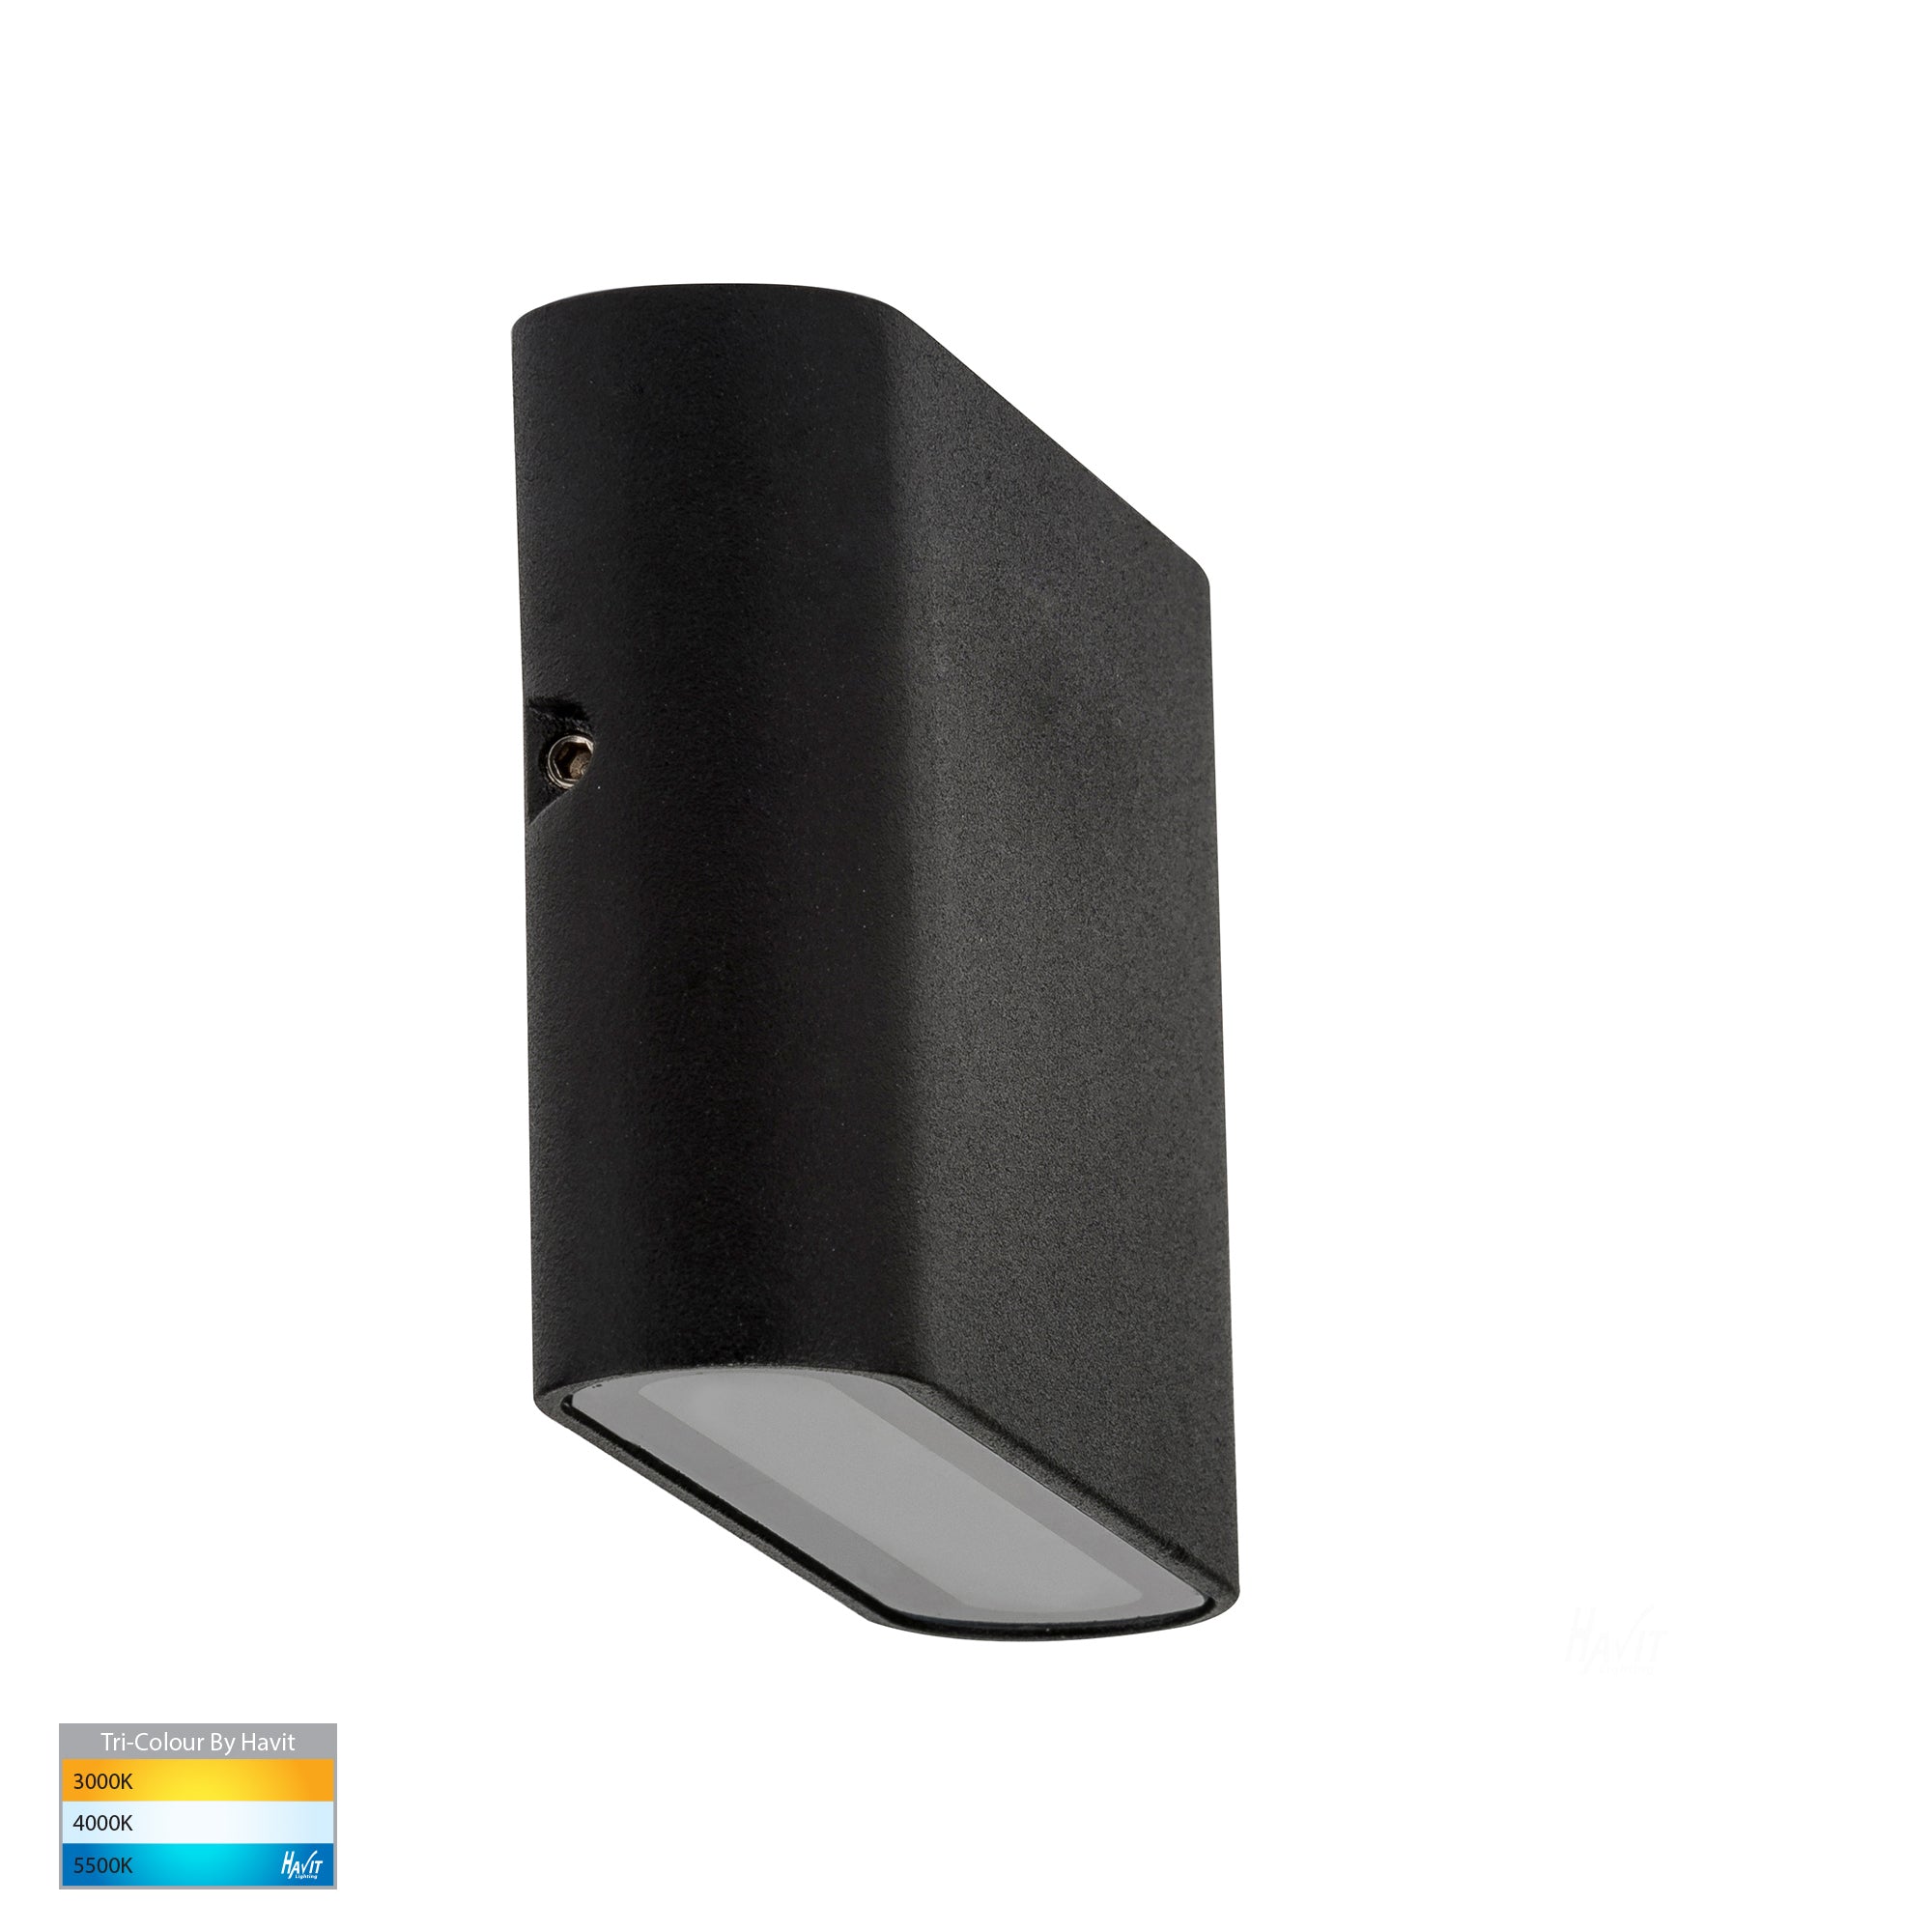 HV3641T-BLK - Lisse Black Fixed Down TRI Colour LED Wall Light